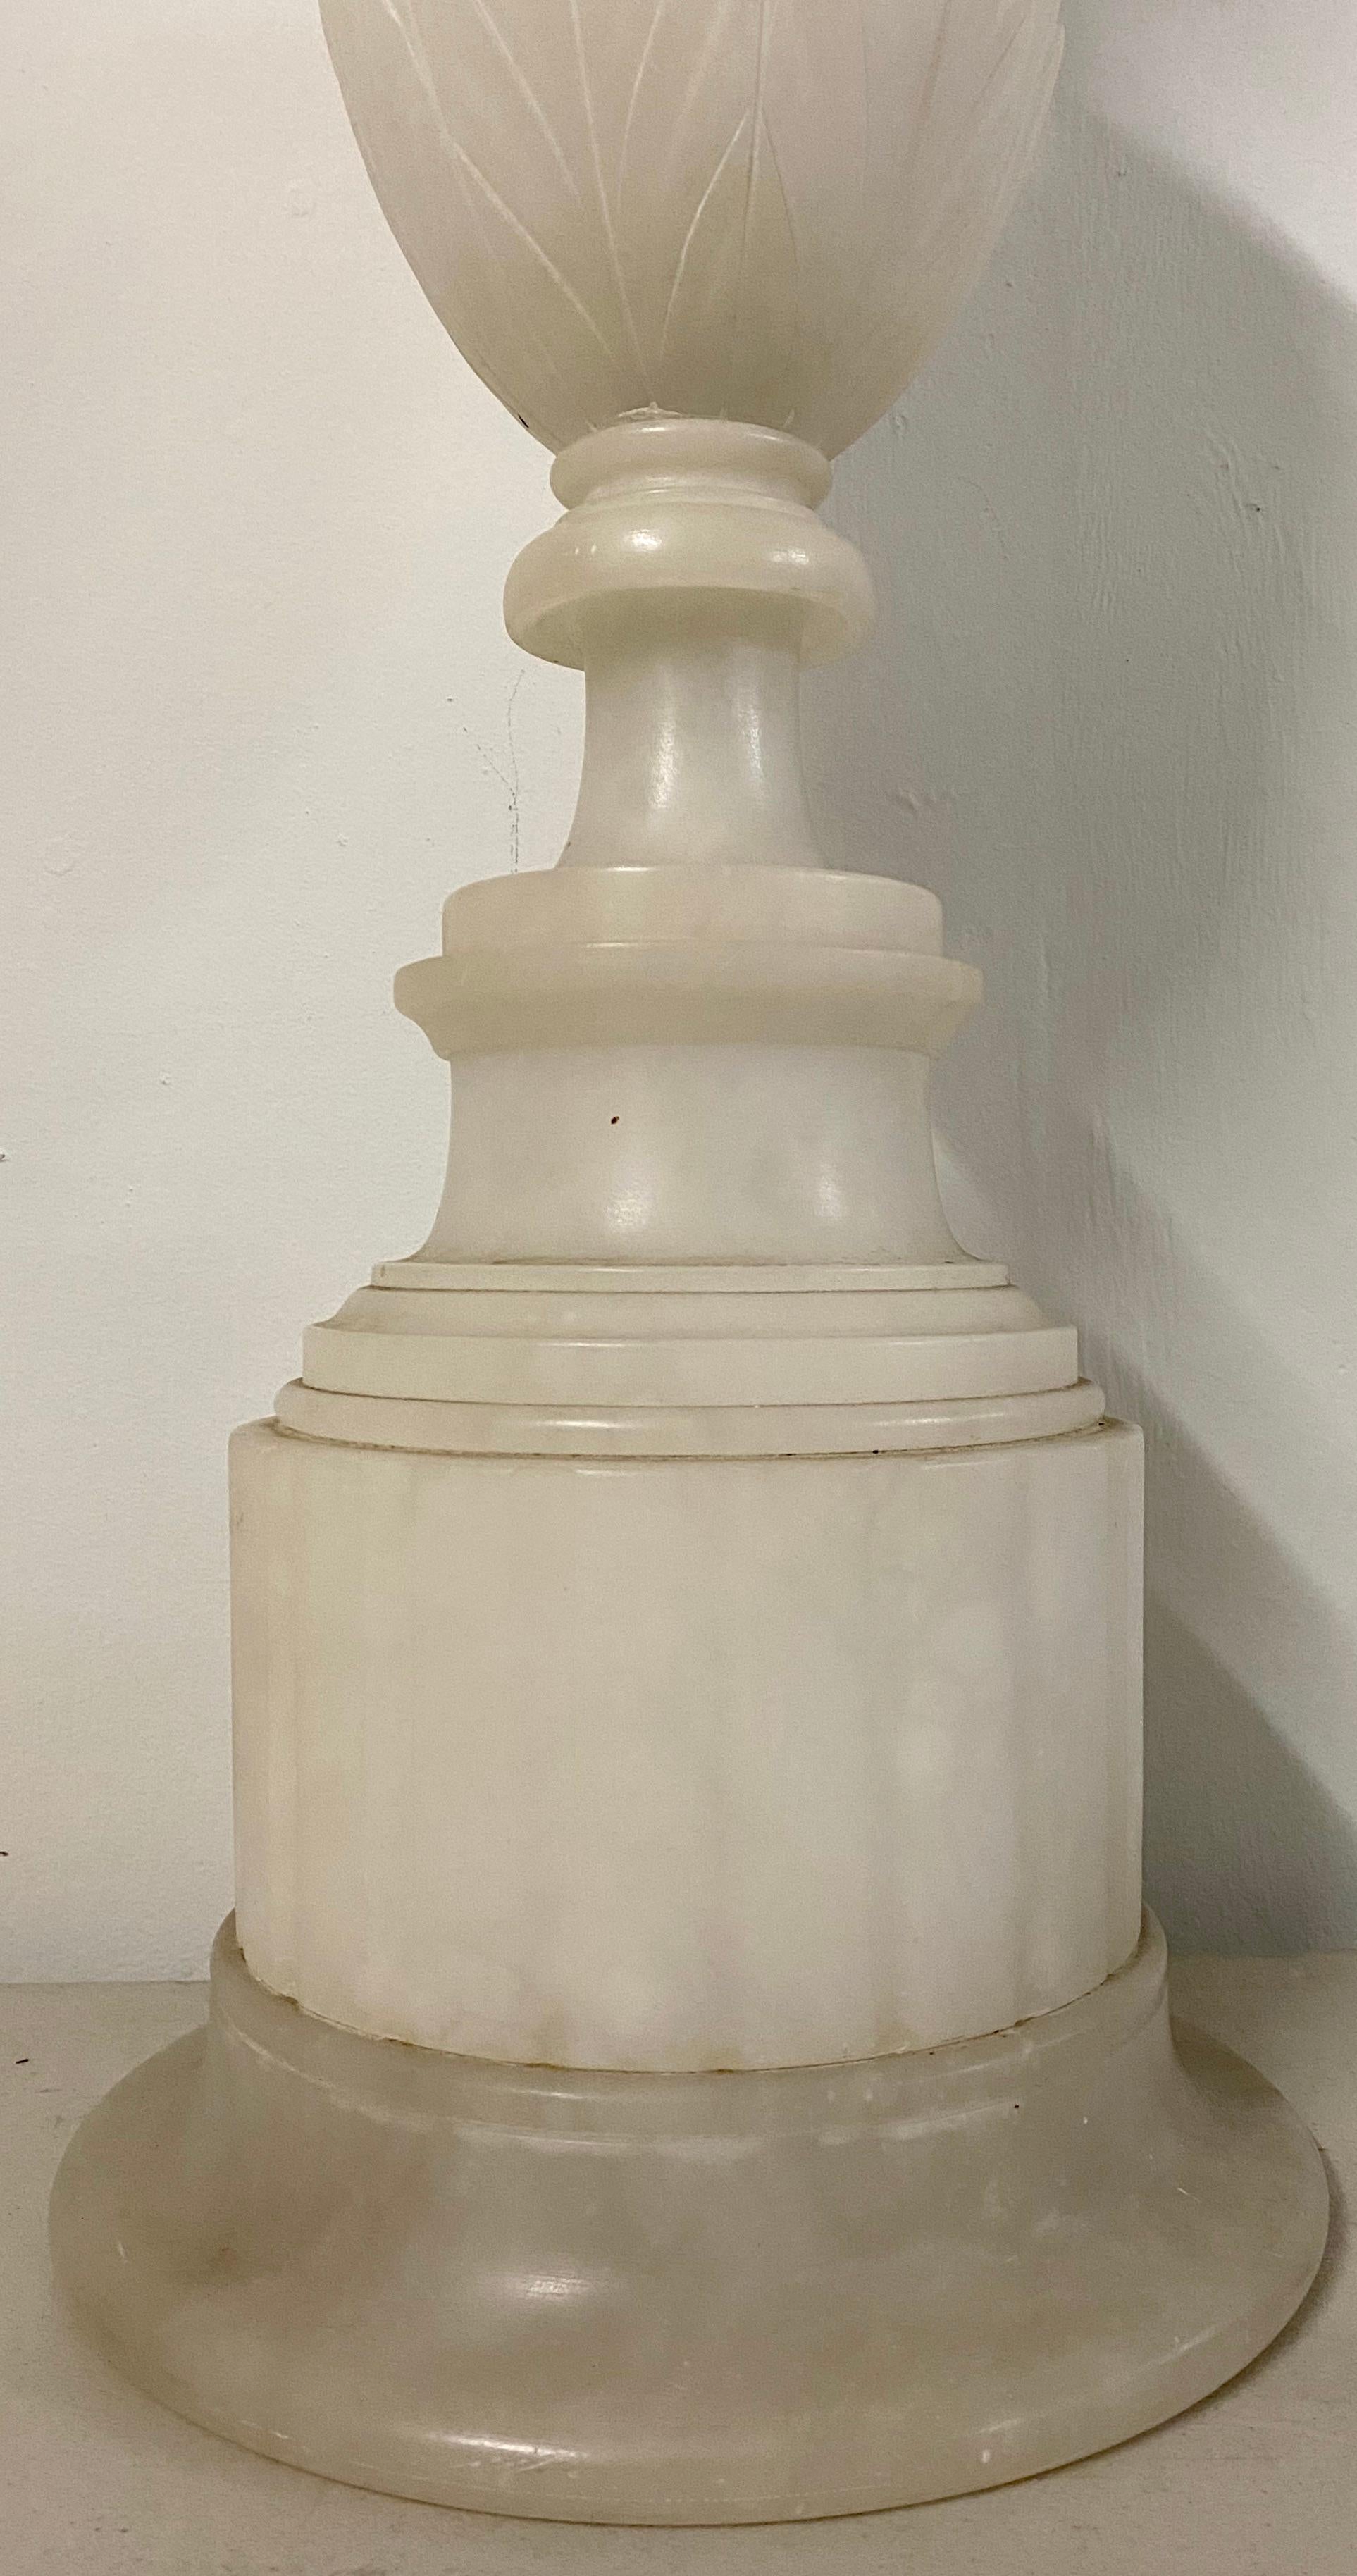 Late 19th century Italian Alabaster urn table lamp, circa 1890

8.5